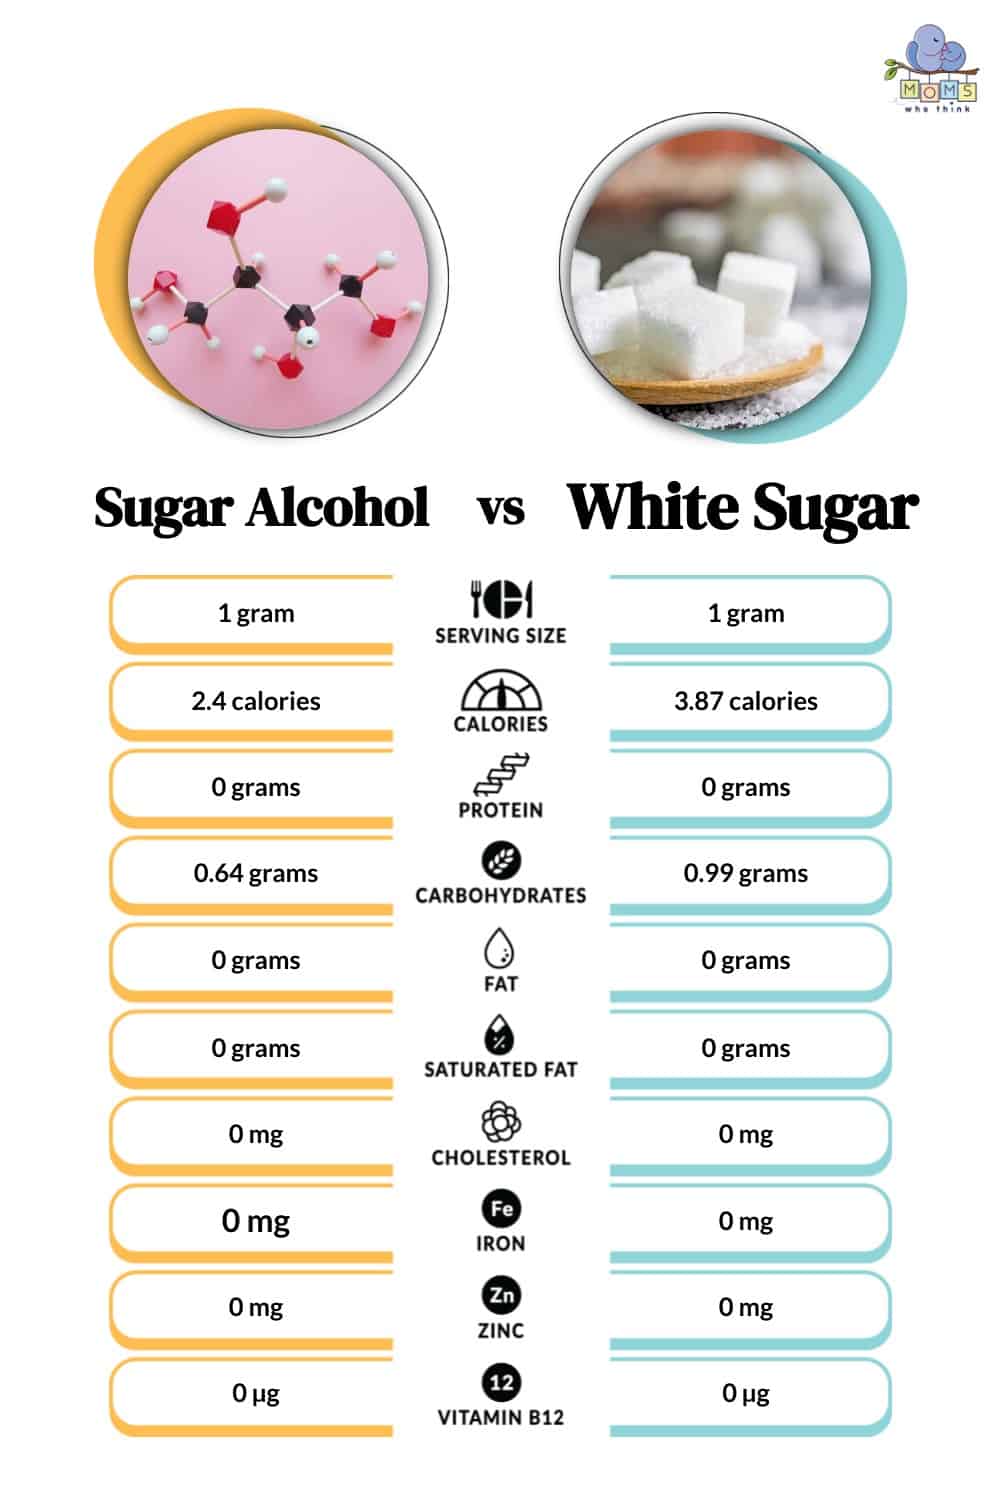 Sugar Alcohol vs White Sugar Nutritional Facts